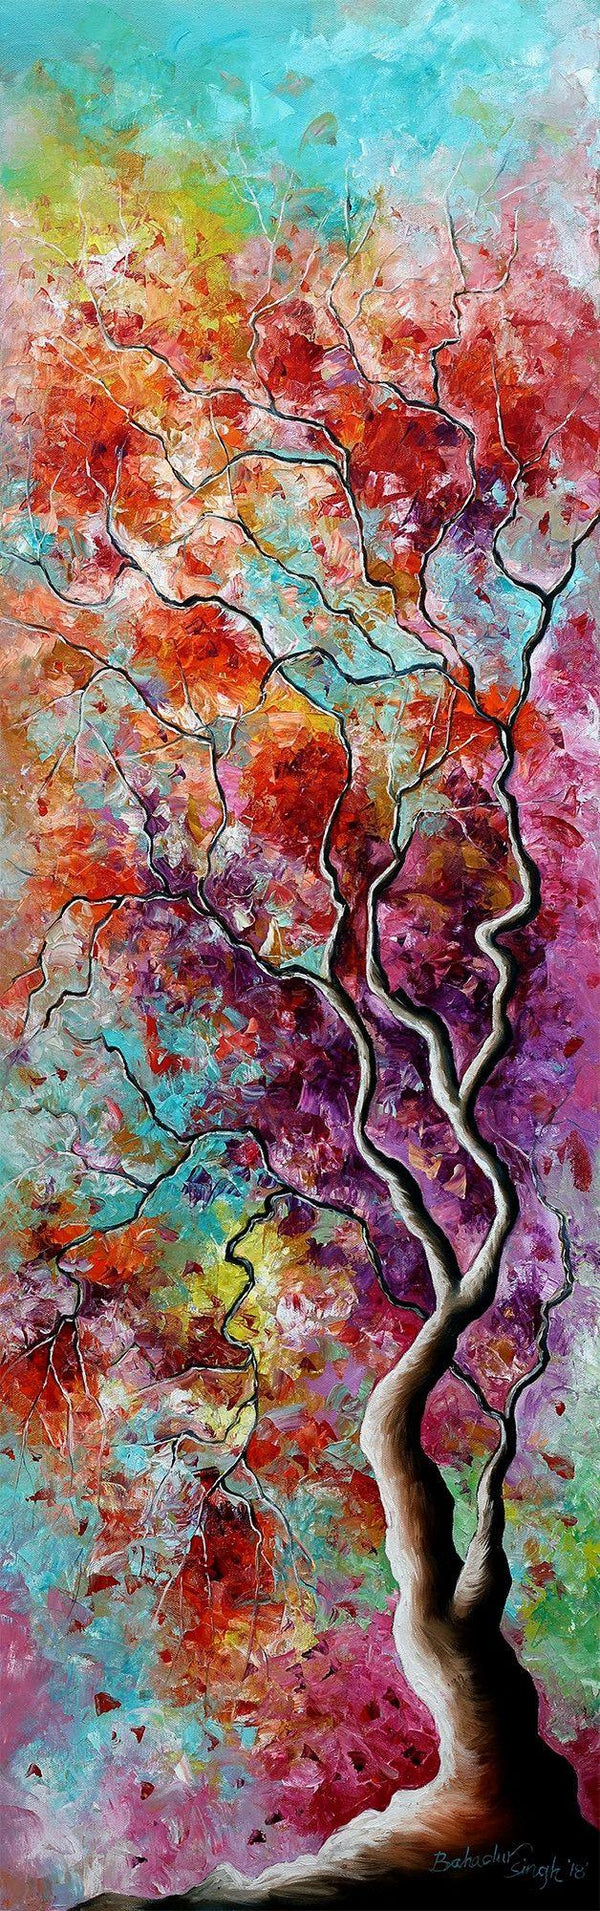 Glory Of Autumn 1 Painting by Bahadur Singh | ArtZolo.com